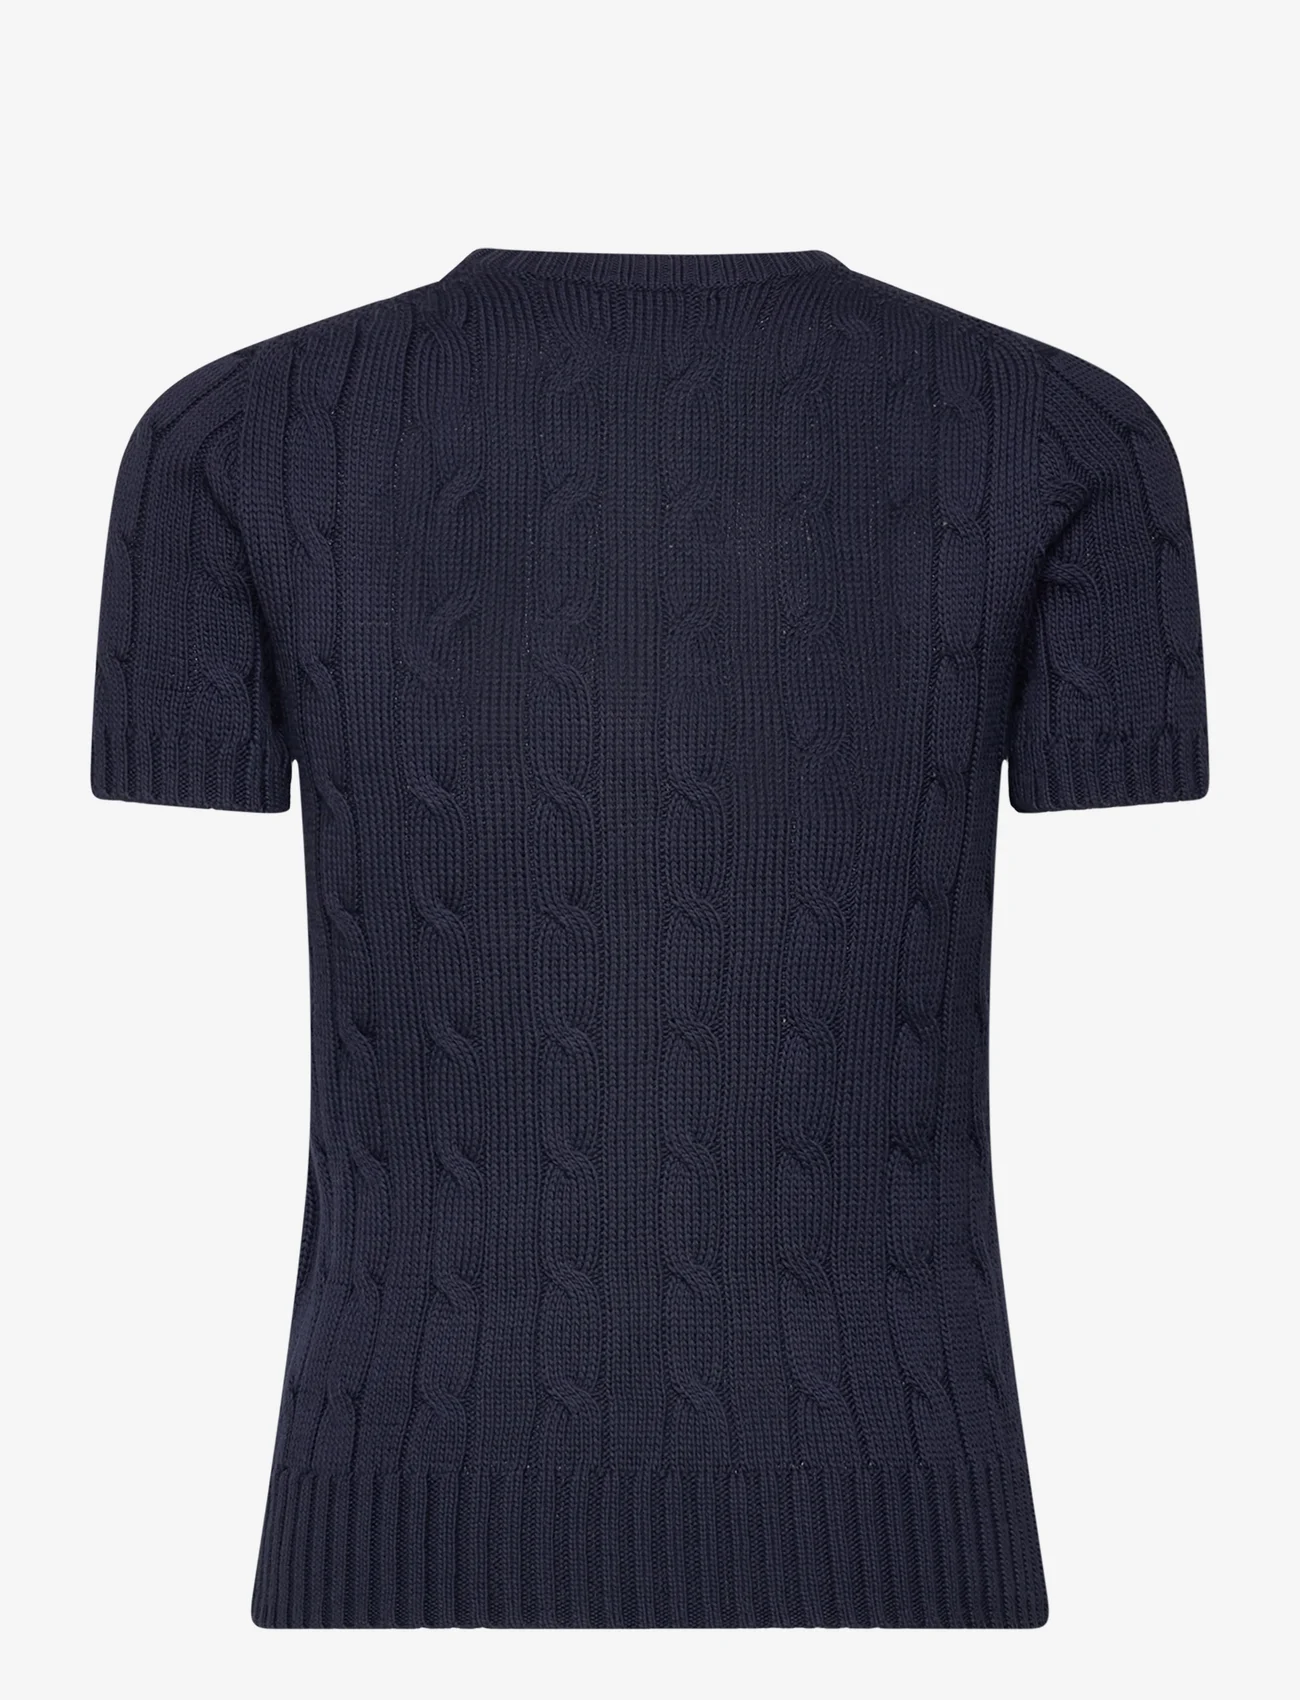 Polo Ralph Lauren - Cable-Knit Cotton Short-Sleeve Sweater - džemperi - hunter navy - 1